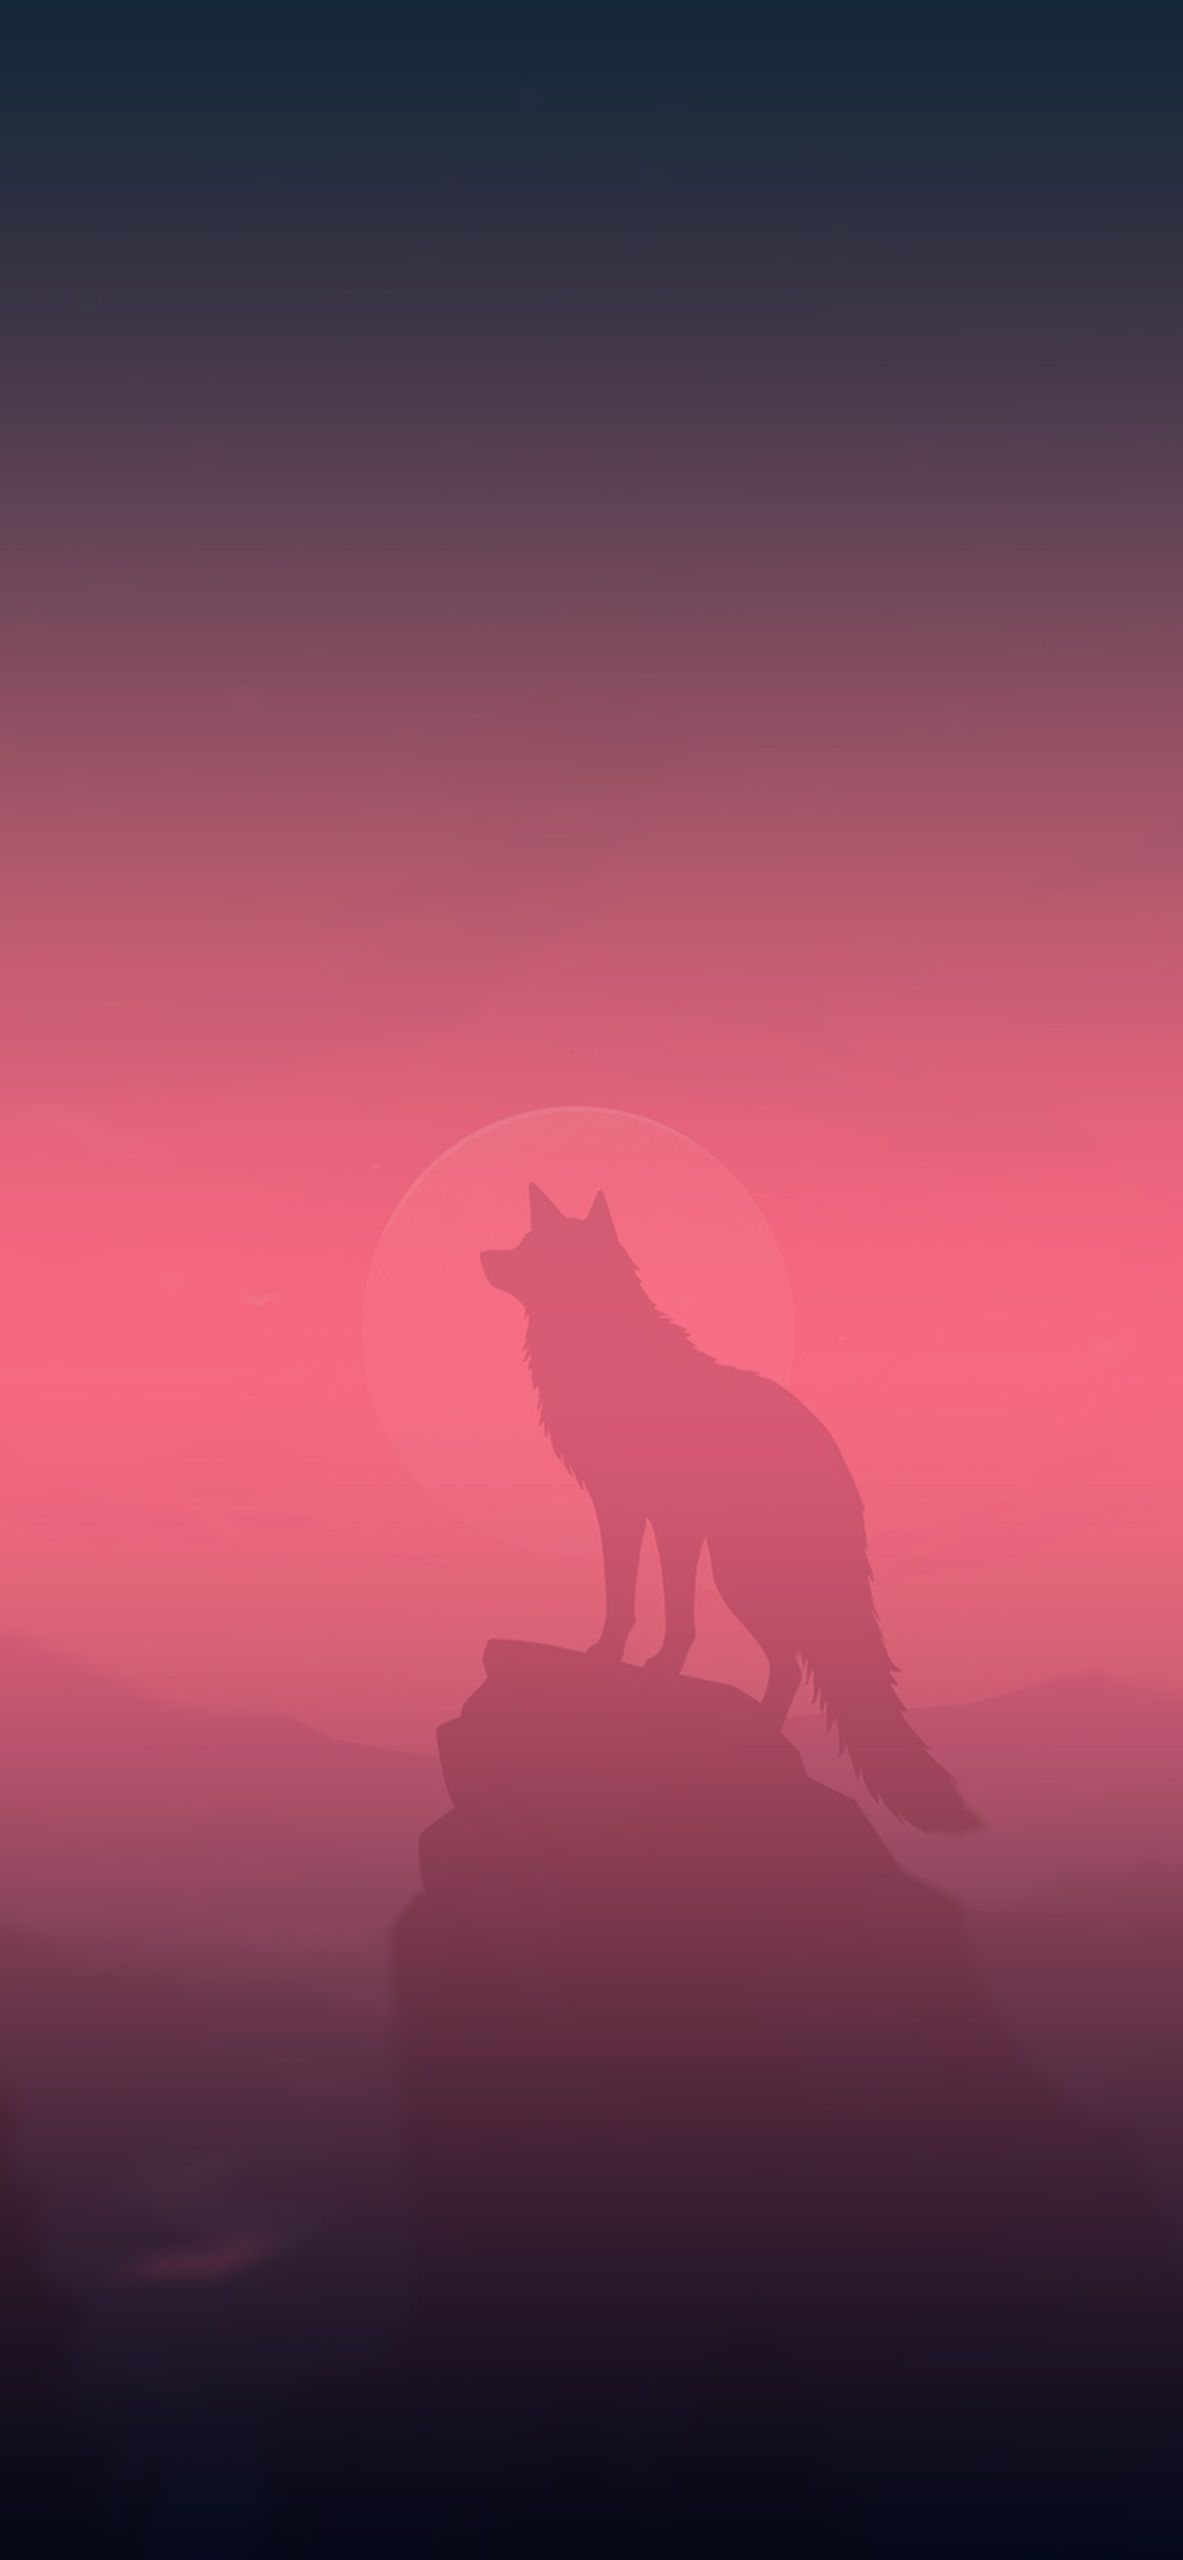  Wölfe Hintergrundbild 1183x2560. Wolf & Sunset Aesthetic Wallpaper Wallpaper for iPhone